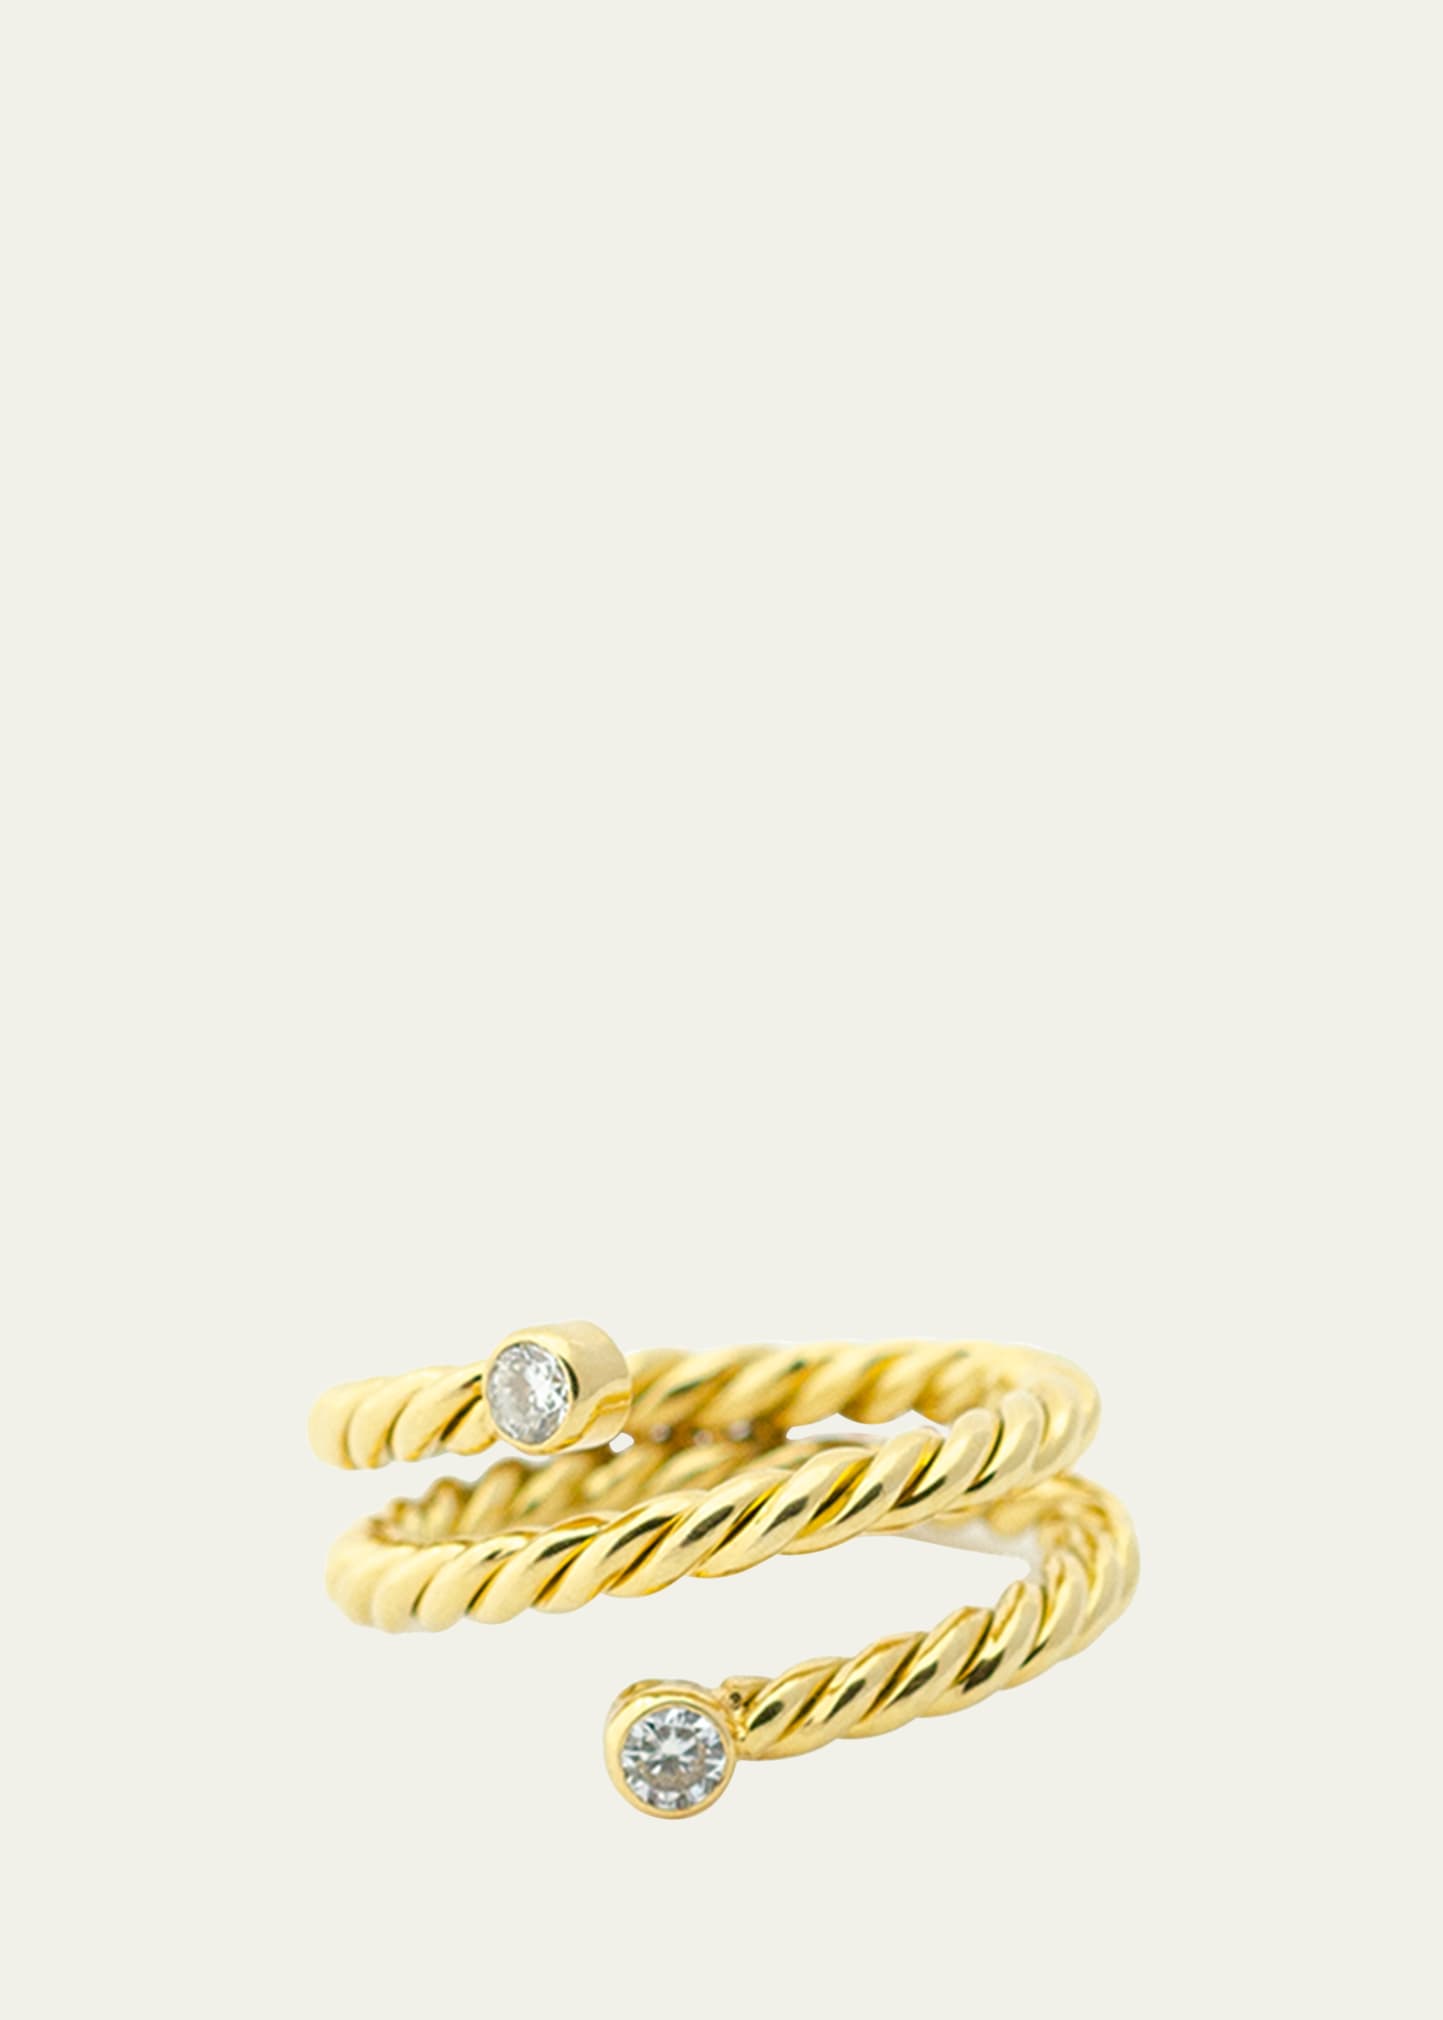 Toi et Moi Hand-Twisted 18K Yellow Gold Diamond Ring, Size 7